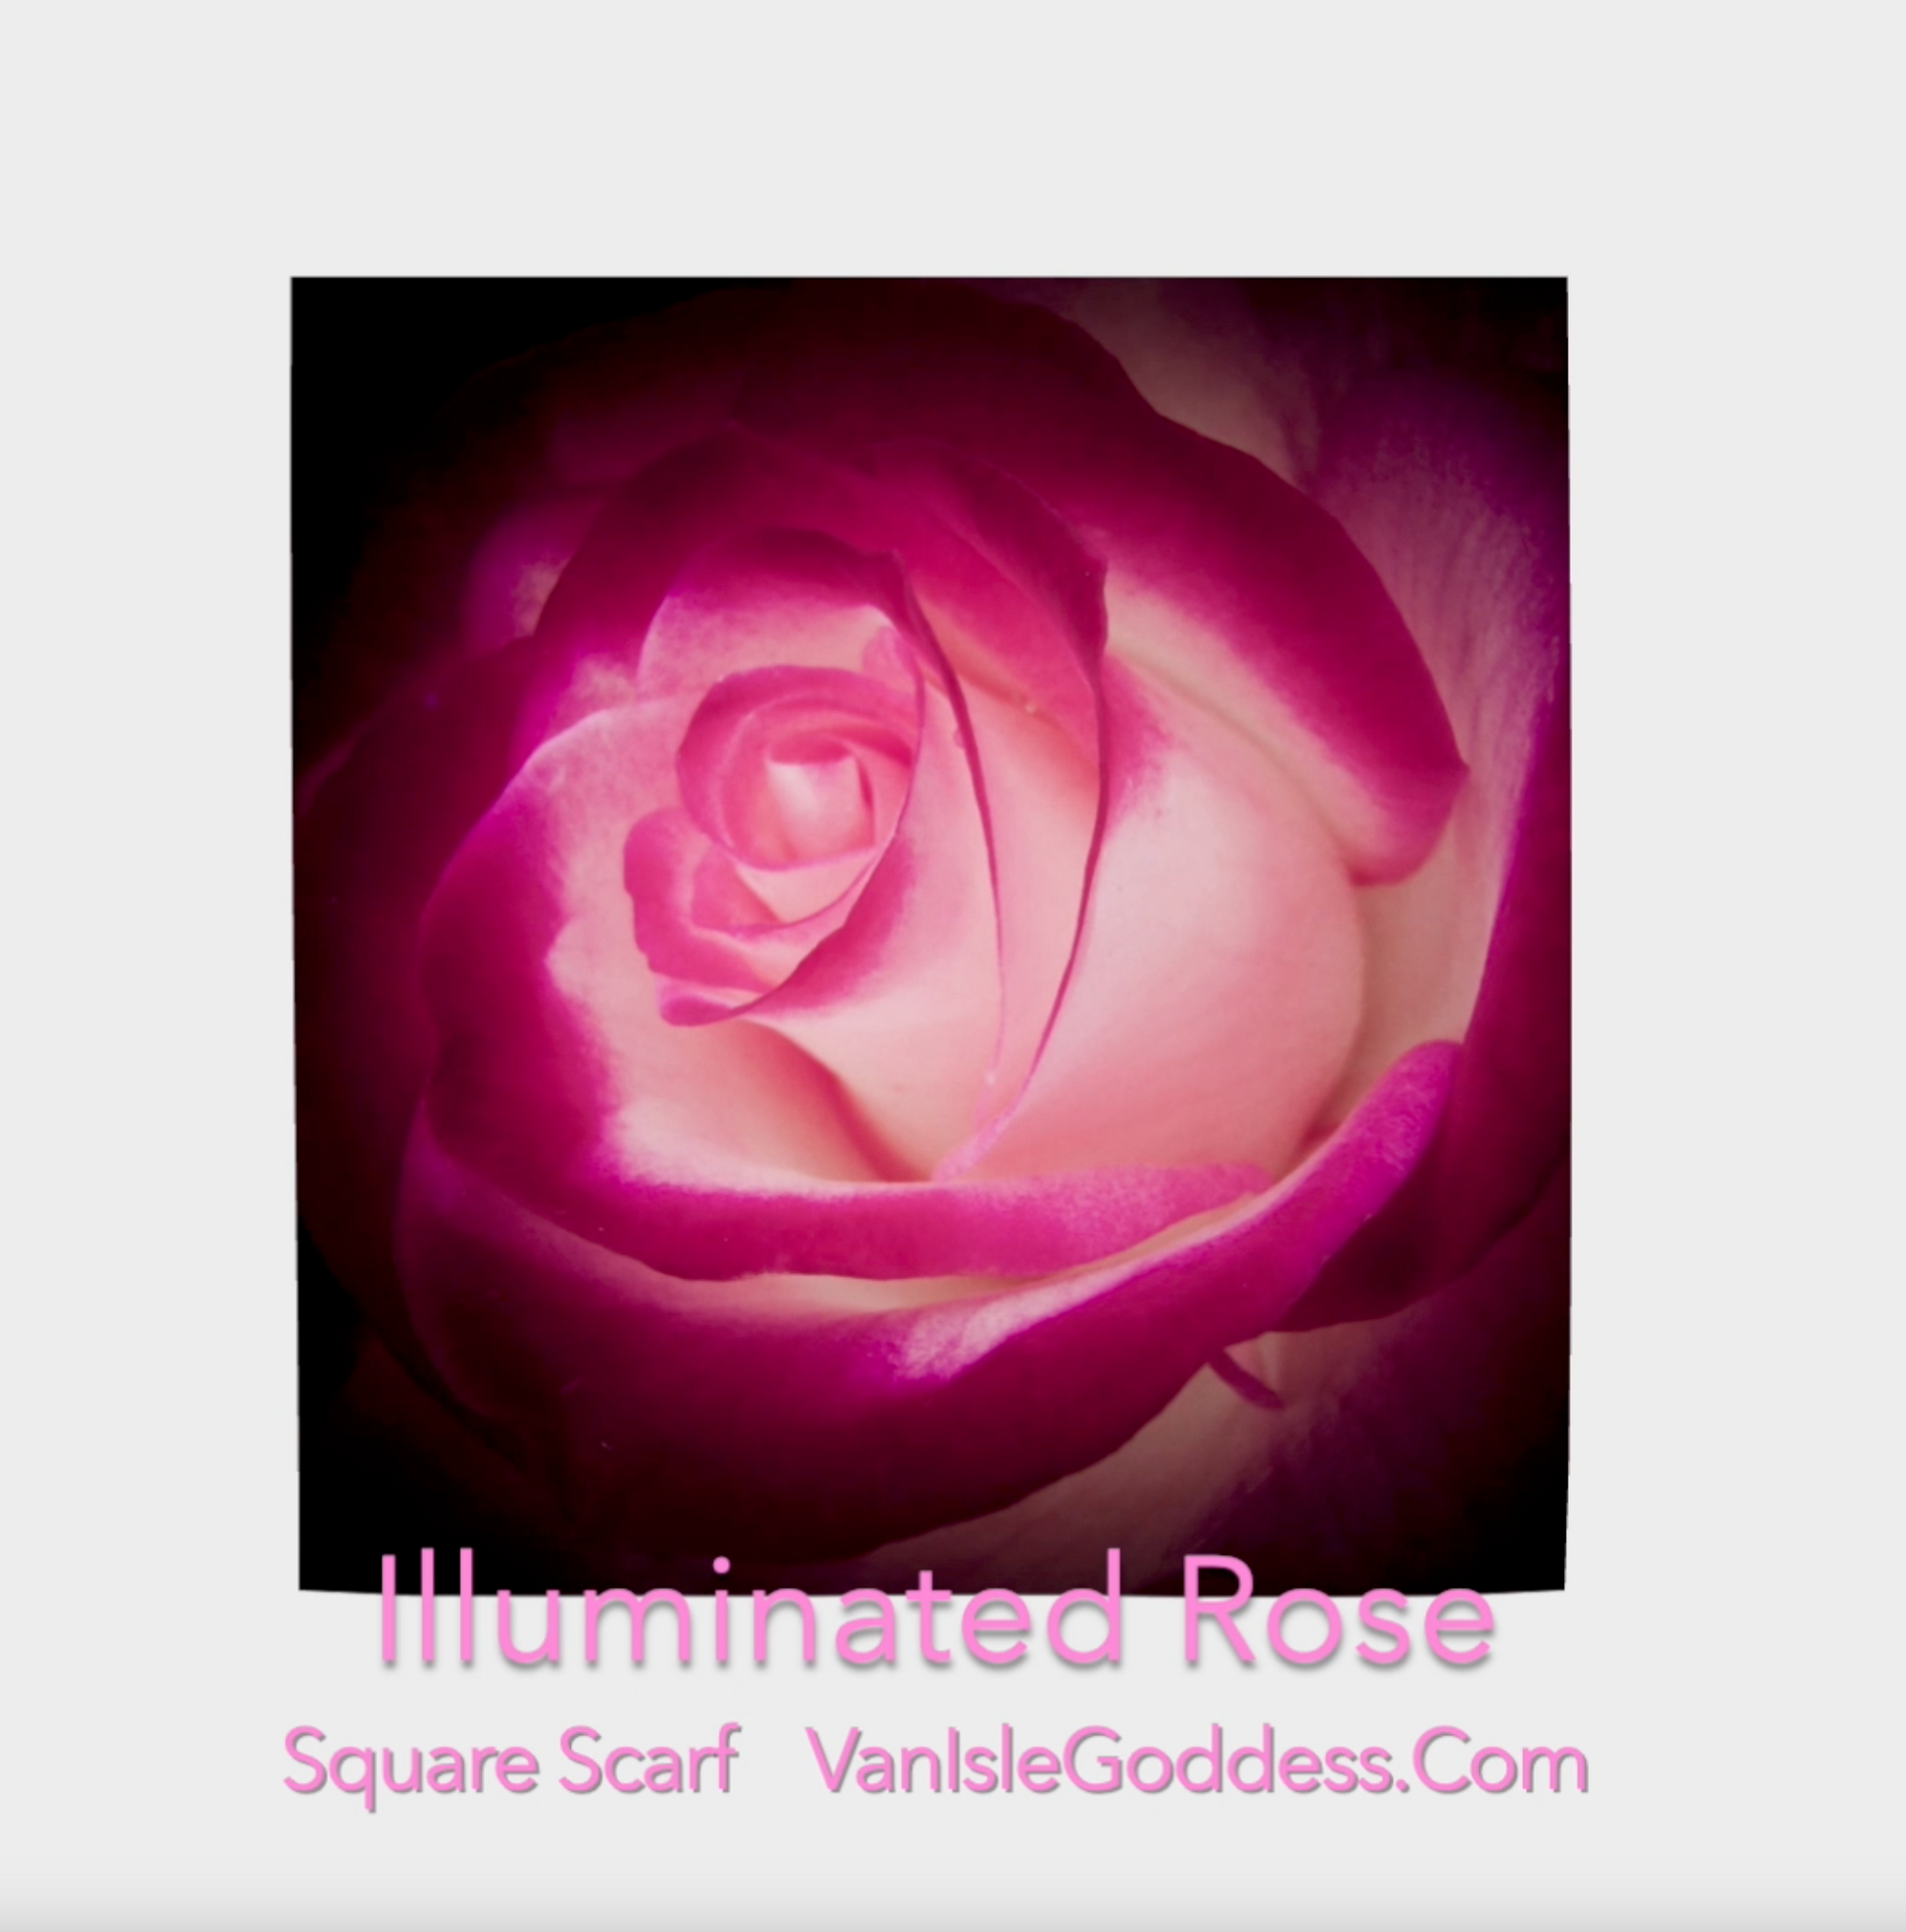 Illuminated Rose Square Scarf shown full size.